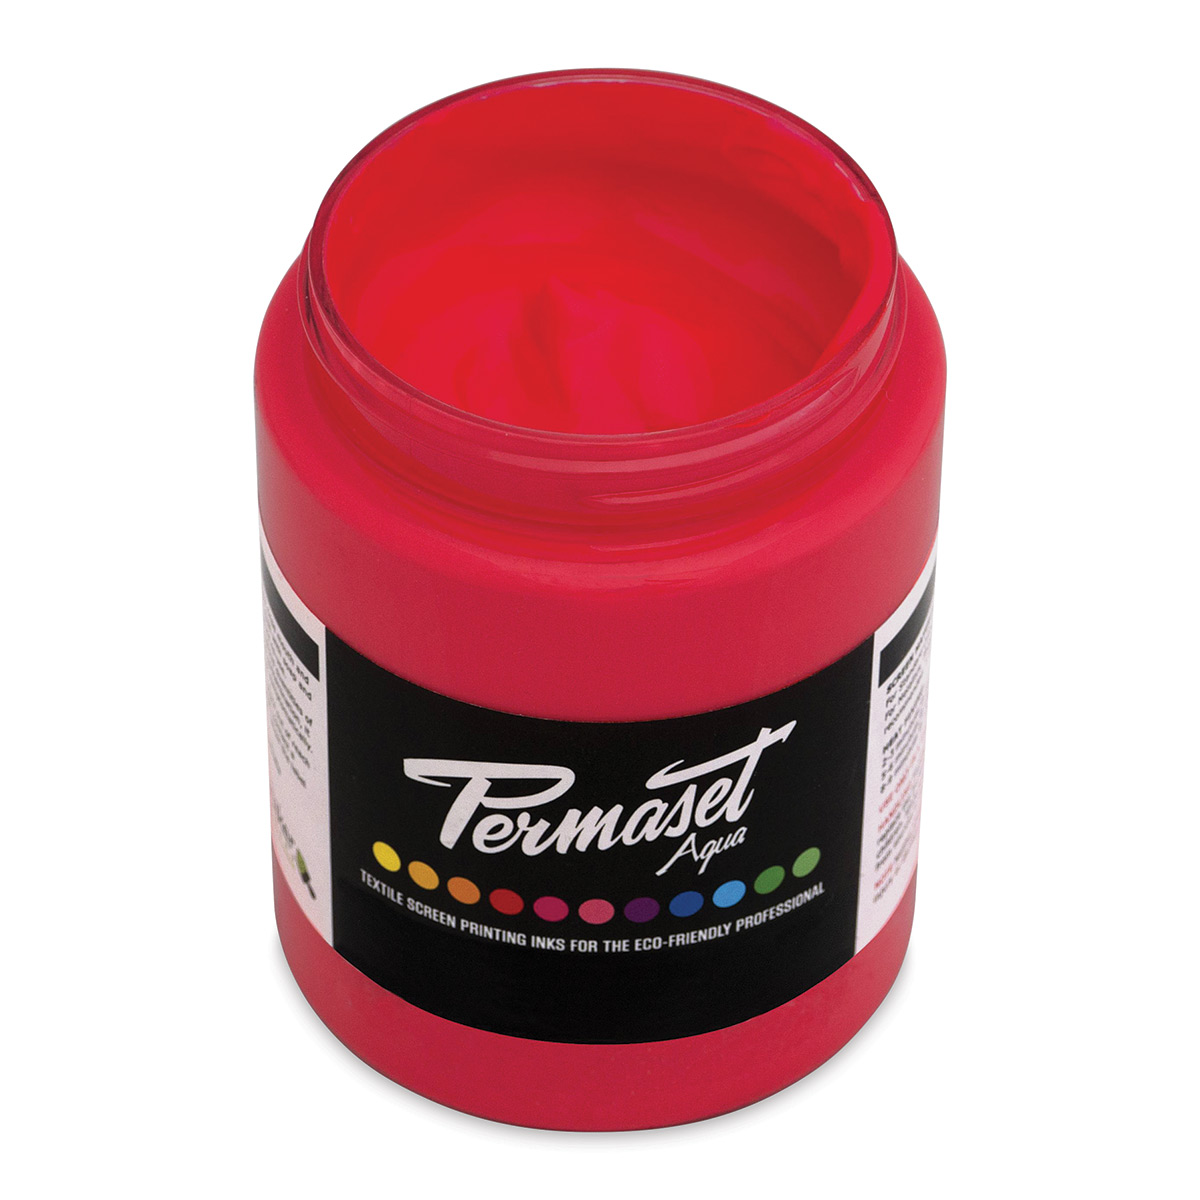 Permaset Aqua Fabric Ink - Glow Red, 300 ml